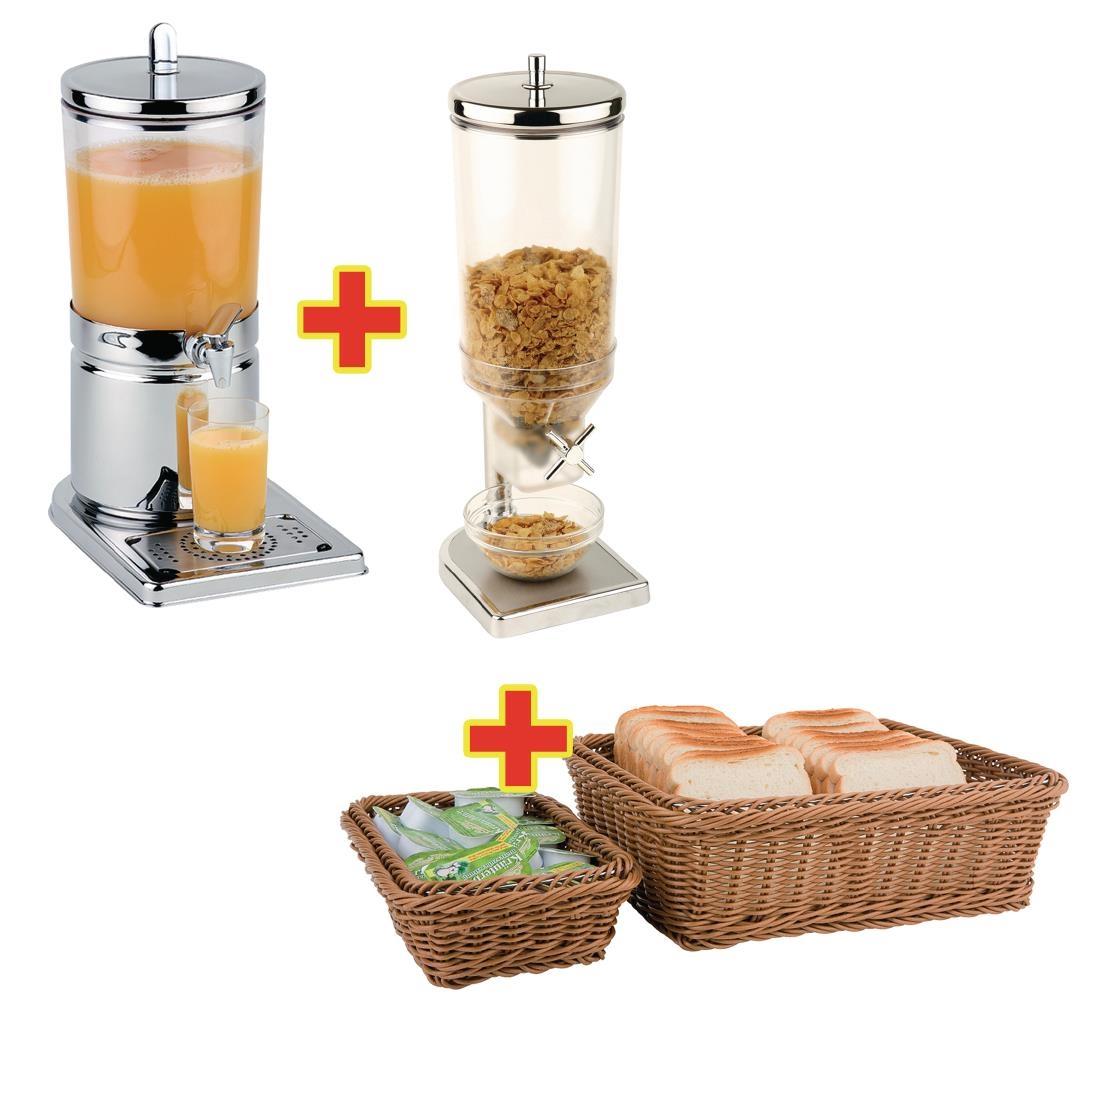 APS Breakfast Service Set with Cereal Dispenser, Juice Dispenser and Baskets - S957  - 1